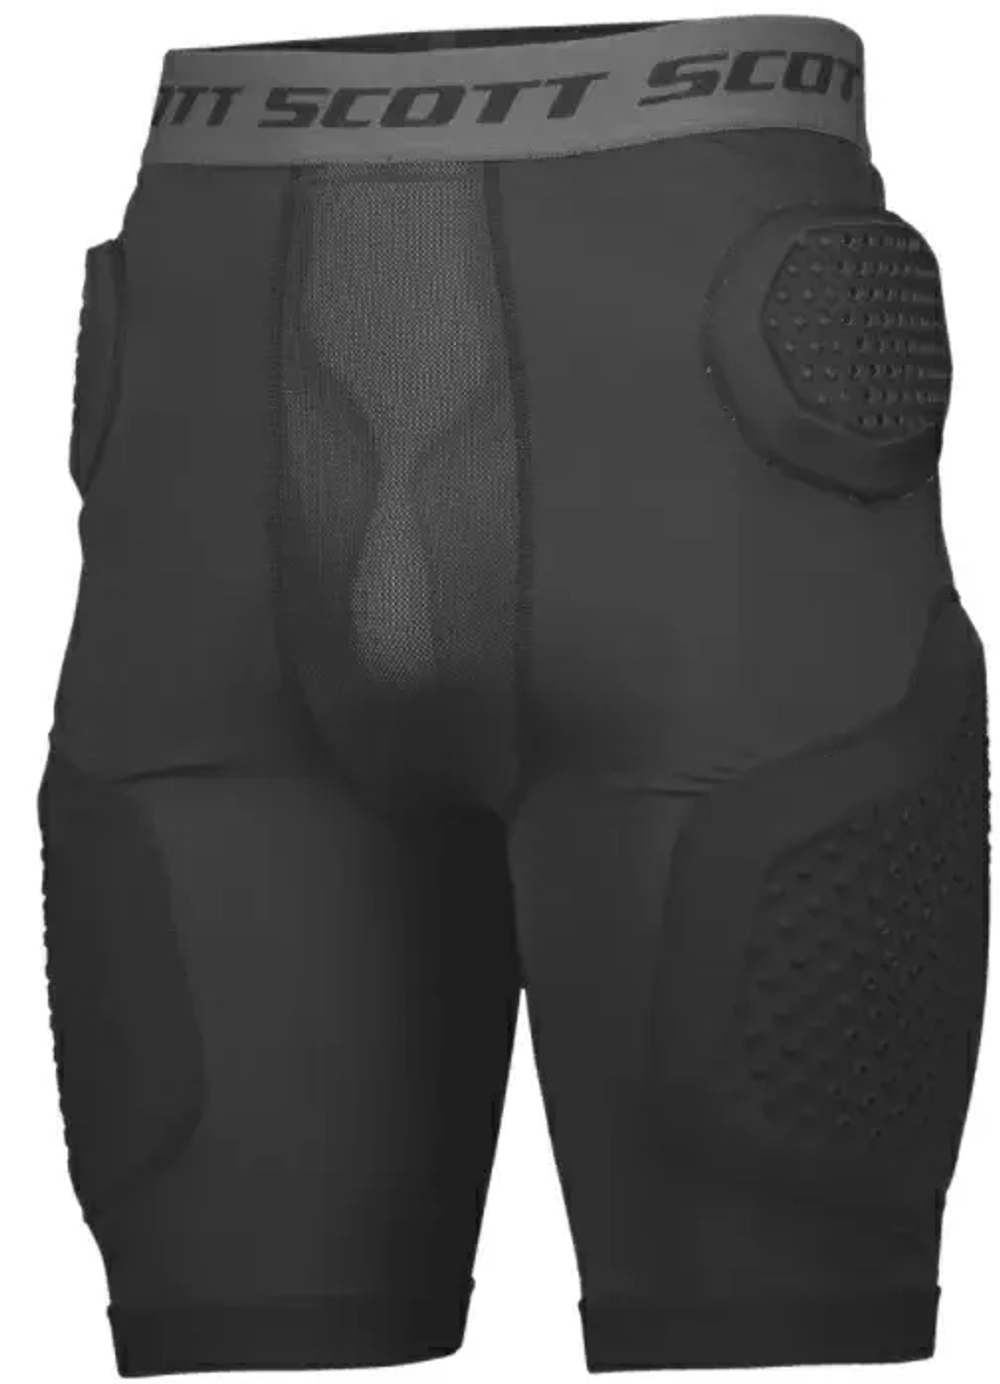 SCOTT защита-шорты ES277817-0001 Short Protector Airflex black / Защита Short Protector